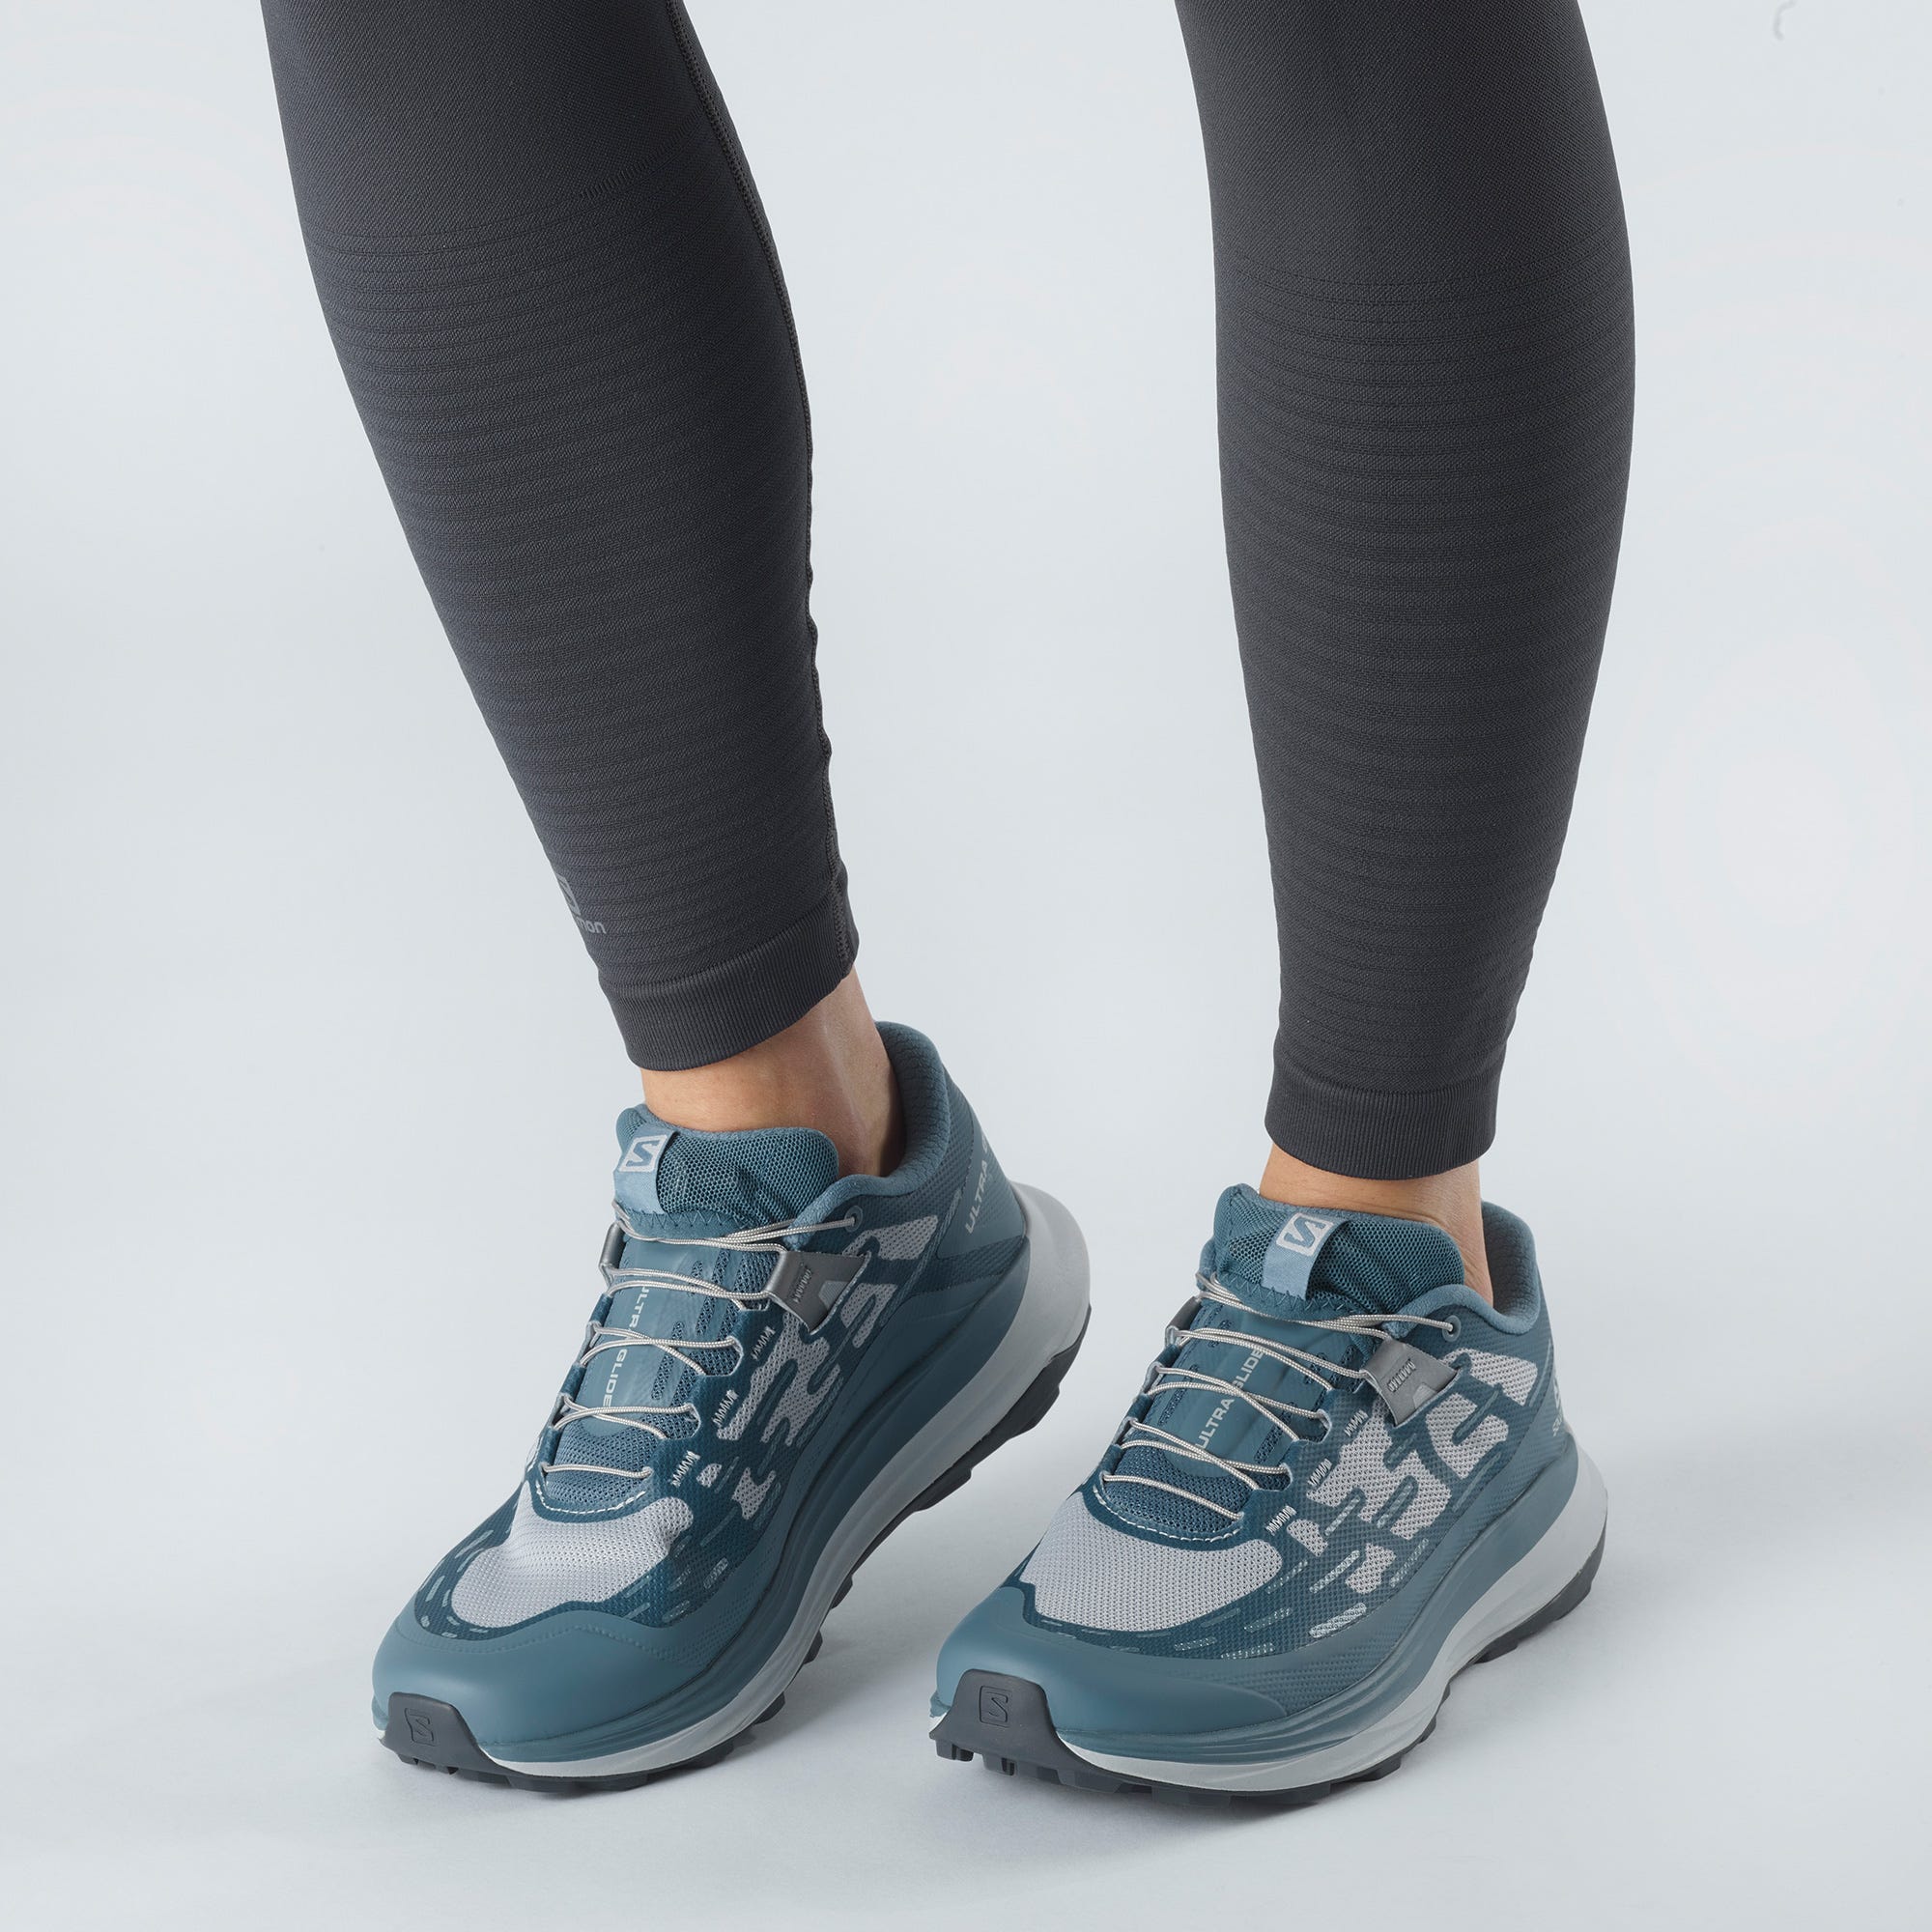 Salomon Ultra Glide Trail Running Shoes (Women's) - Bluest/Pearl Blue/Ebony - Find Your Feet Australia Hobart Launceston Tasmania